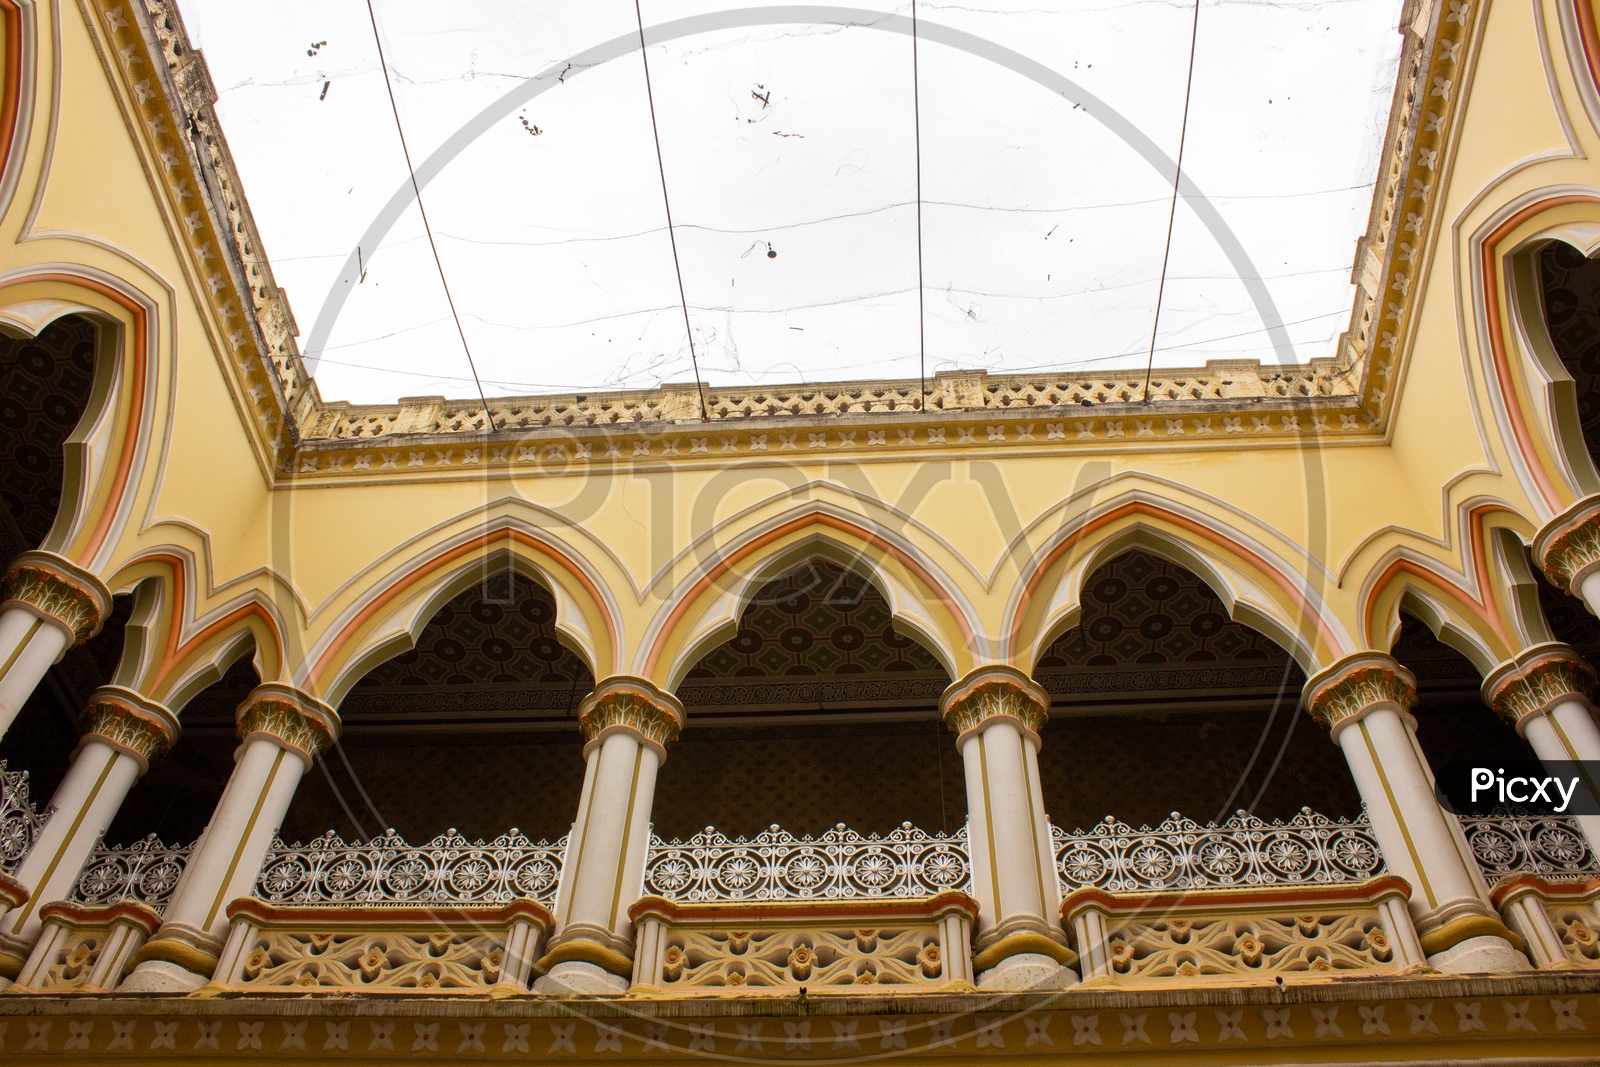 Interiors of Jayamahal Palace